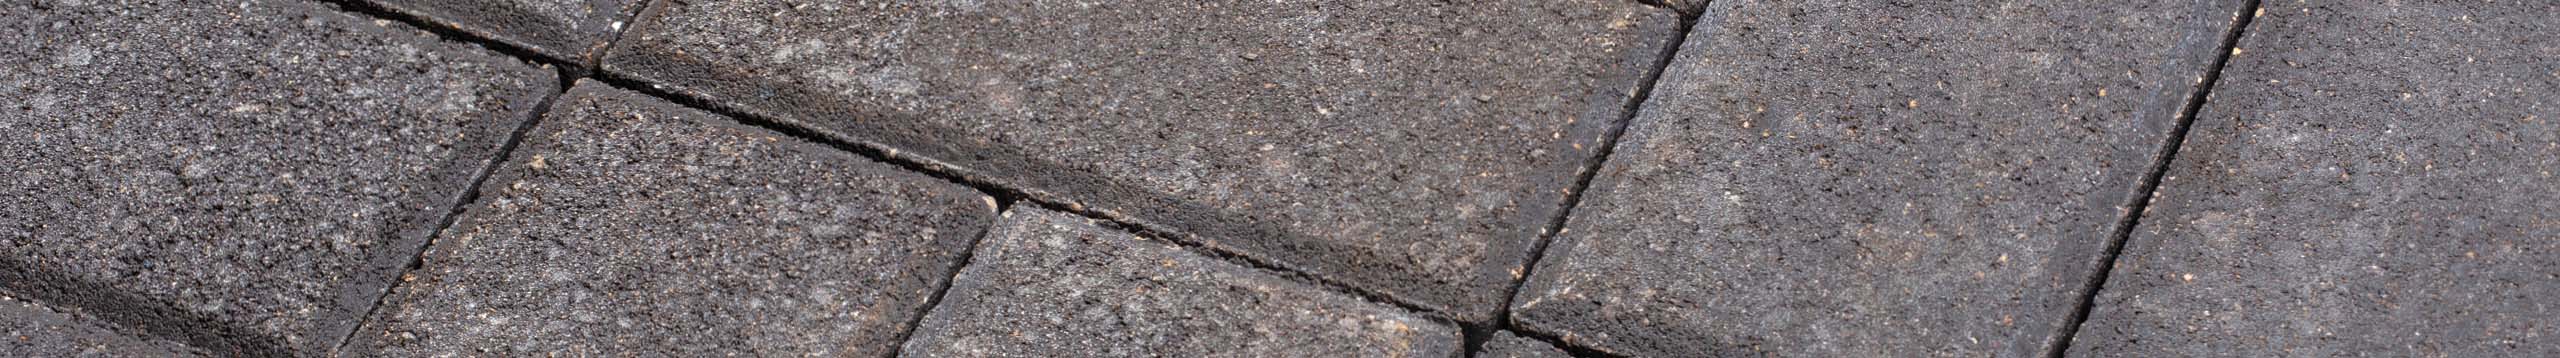 gray driveway paver close up